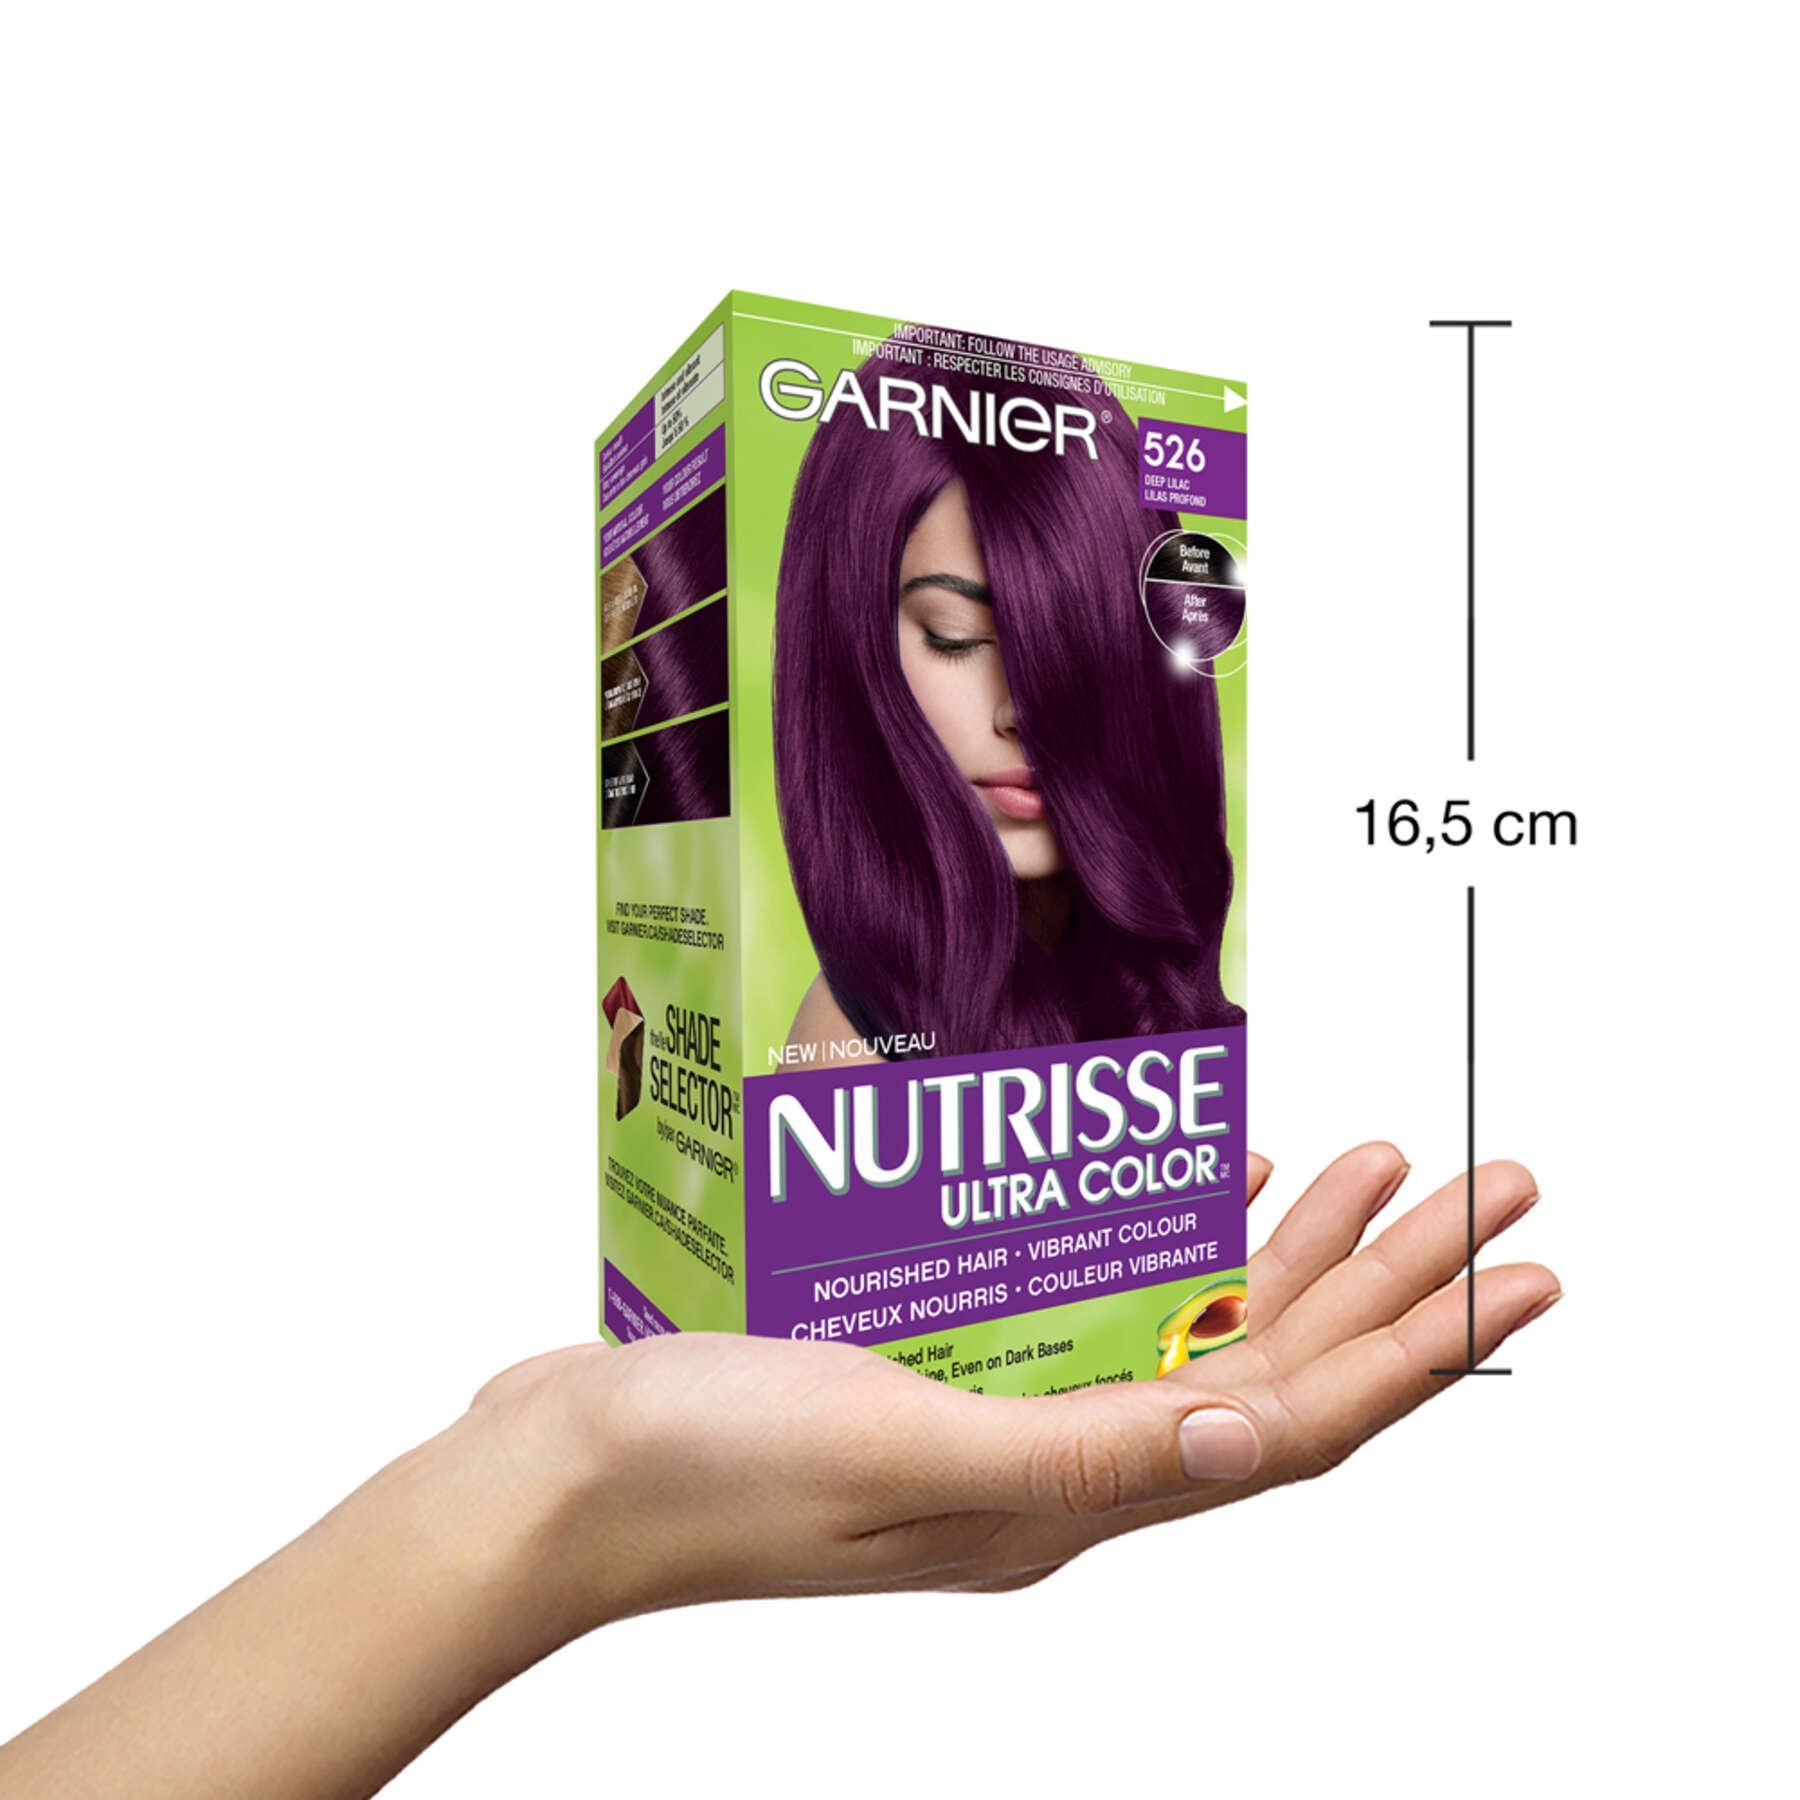 garnier hair dye nutrisse ultra color 526 deep lilac 0603084545087 inhand